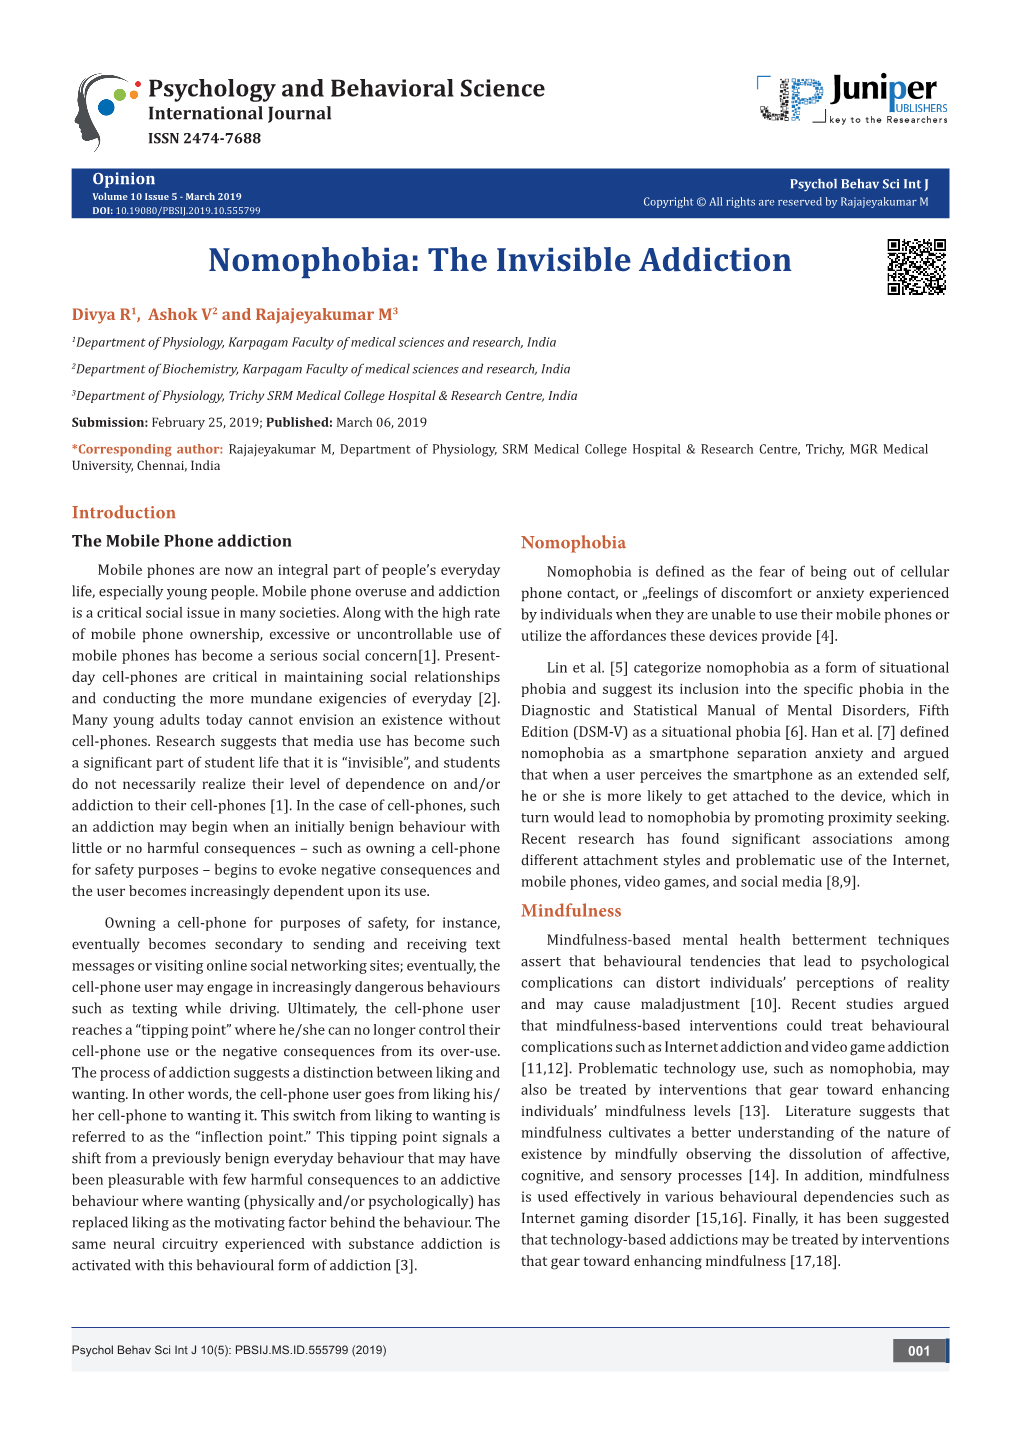 Nomophobia: the Invisible Addiction